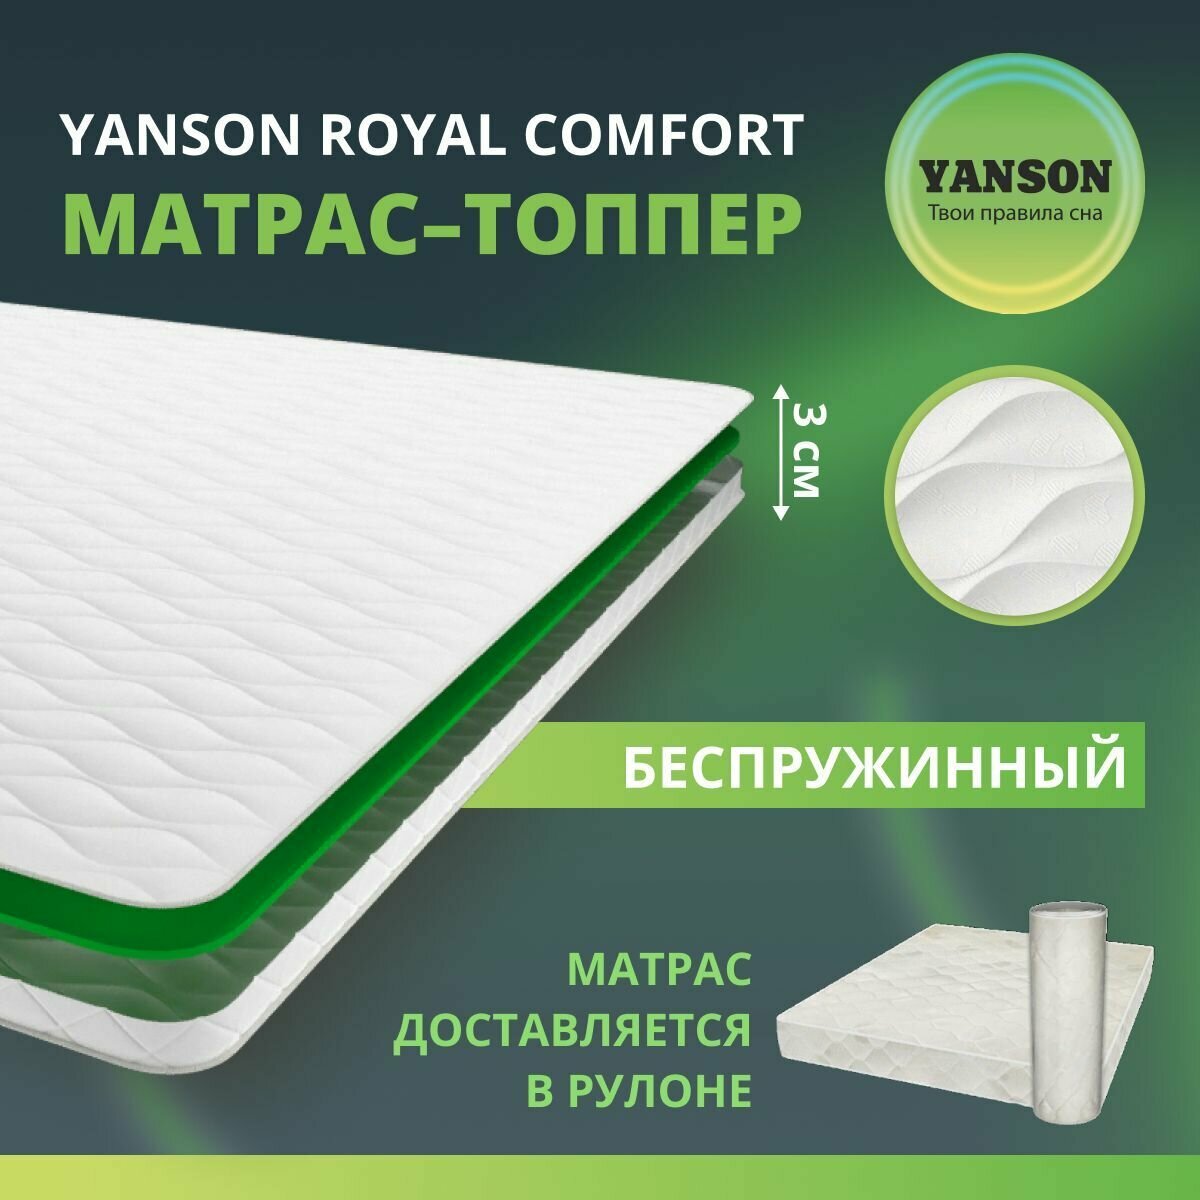 YANSON Royal Comfort 160-195